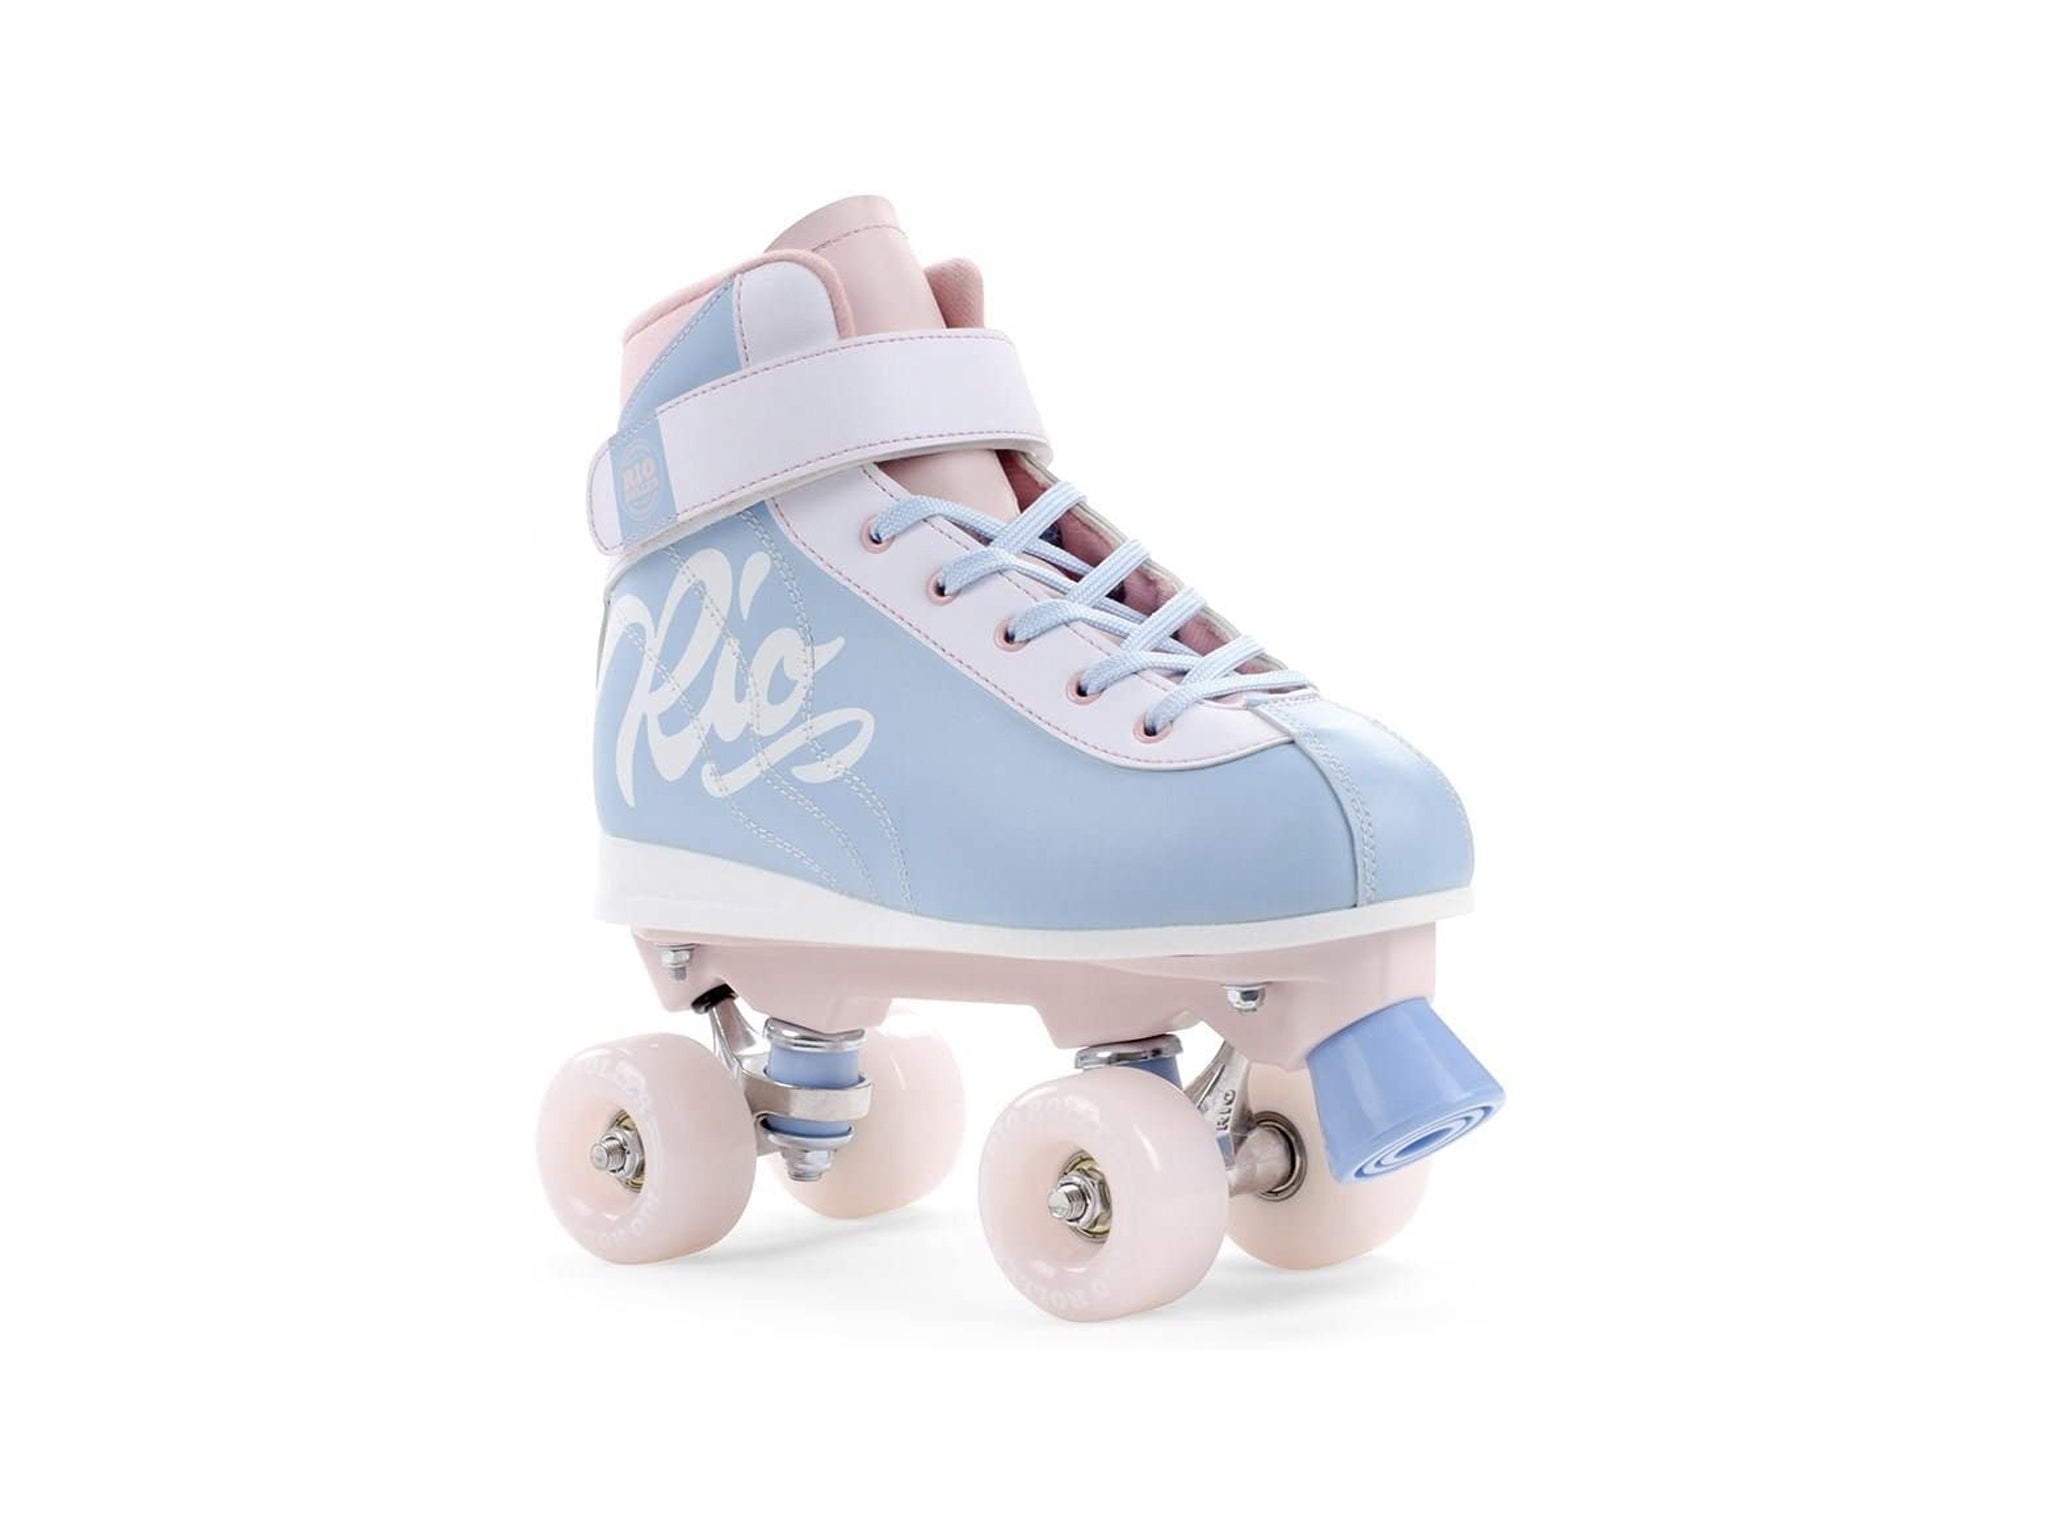 WeSkate Inline Skates for kids Roller Skate Blades with Adjustable Size 31-42 & Flashing Light Up Wheels for Boys Girls Teens Women 